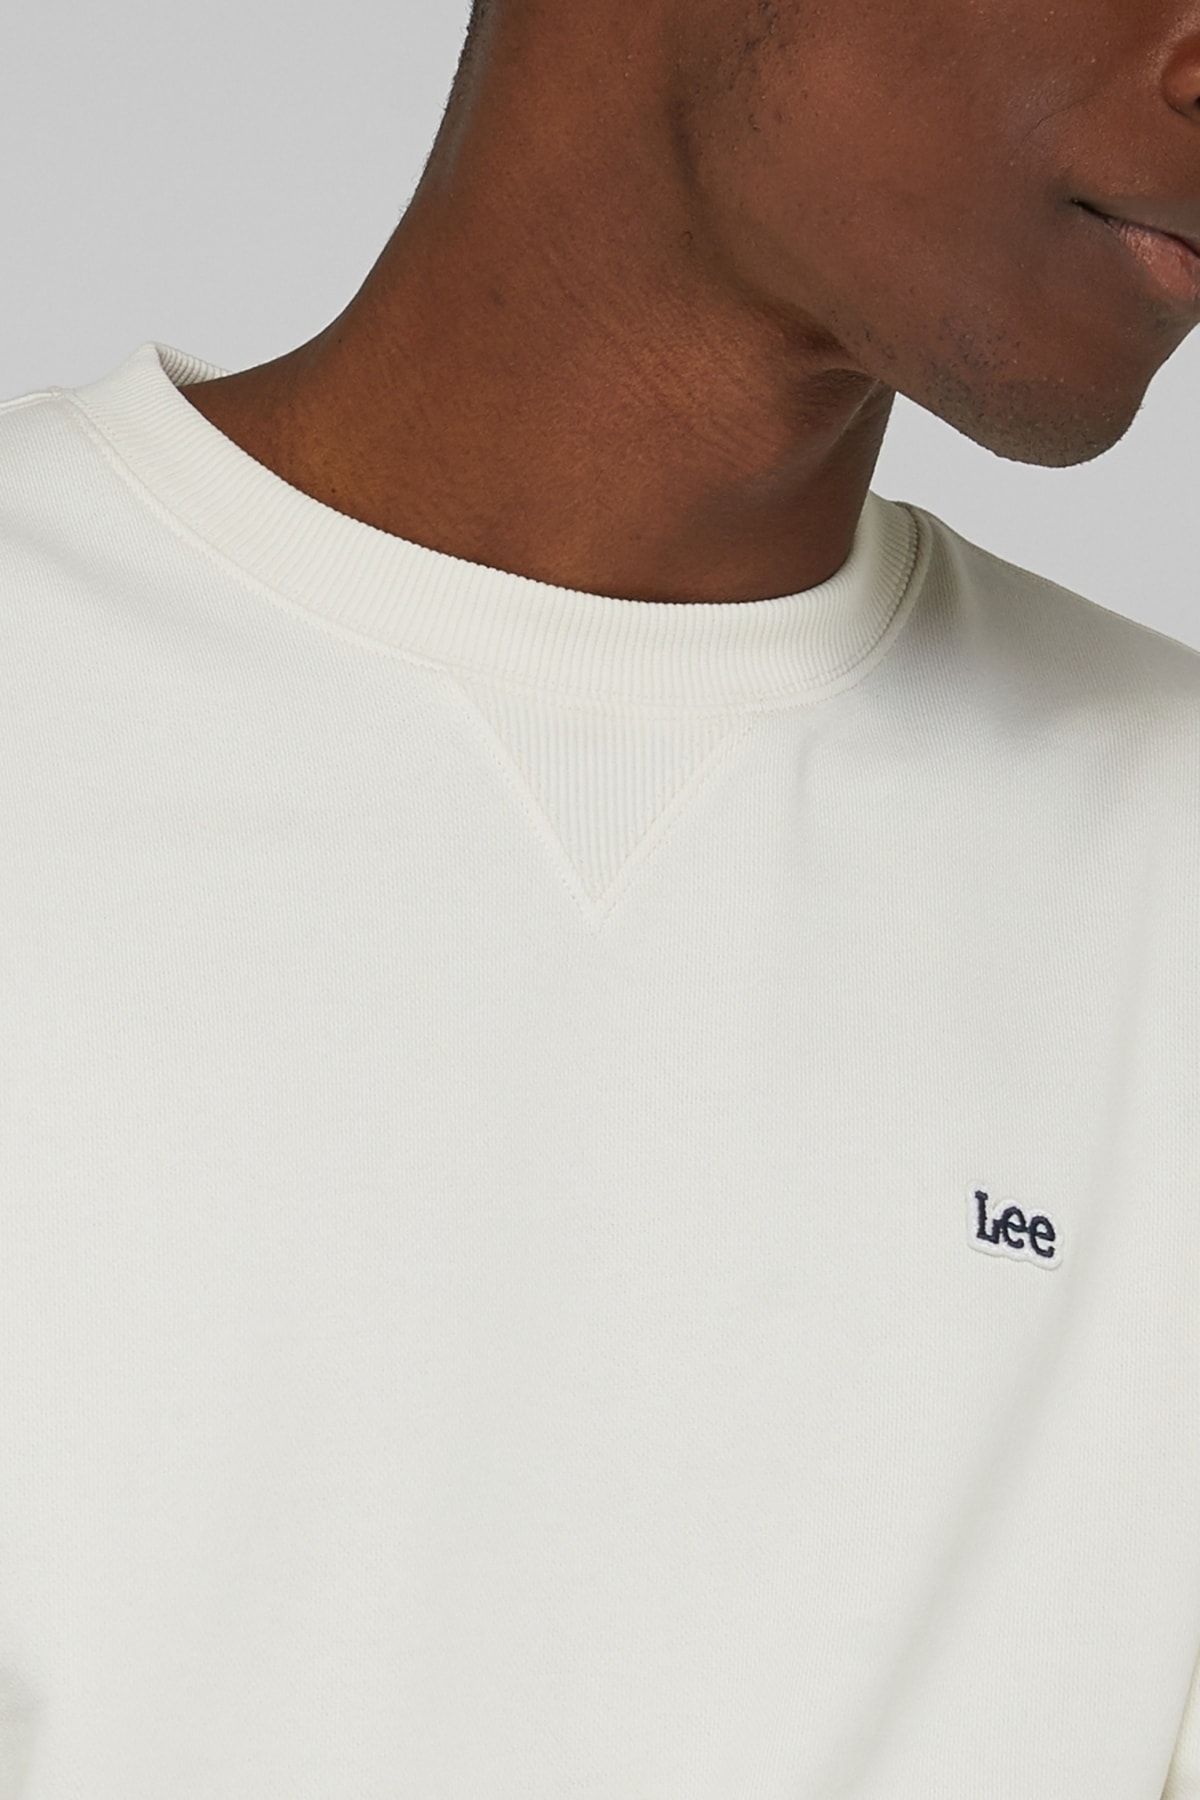 Lee به طور منظم مناسب طبیعی برش 100 ٪ یقه پنبه ECRU پیراهن